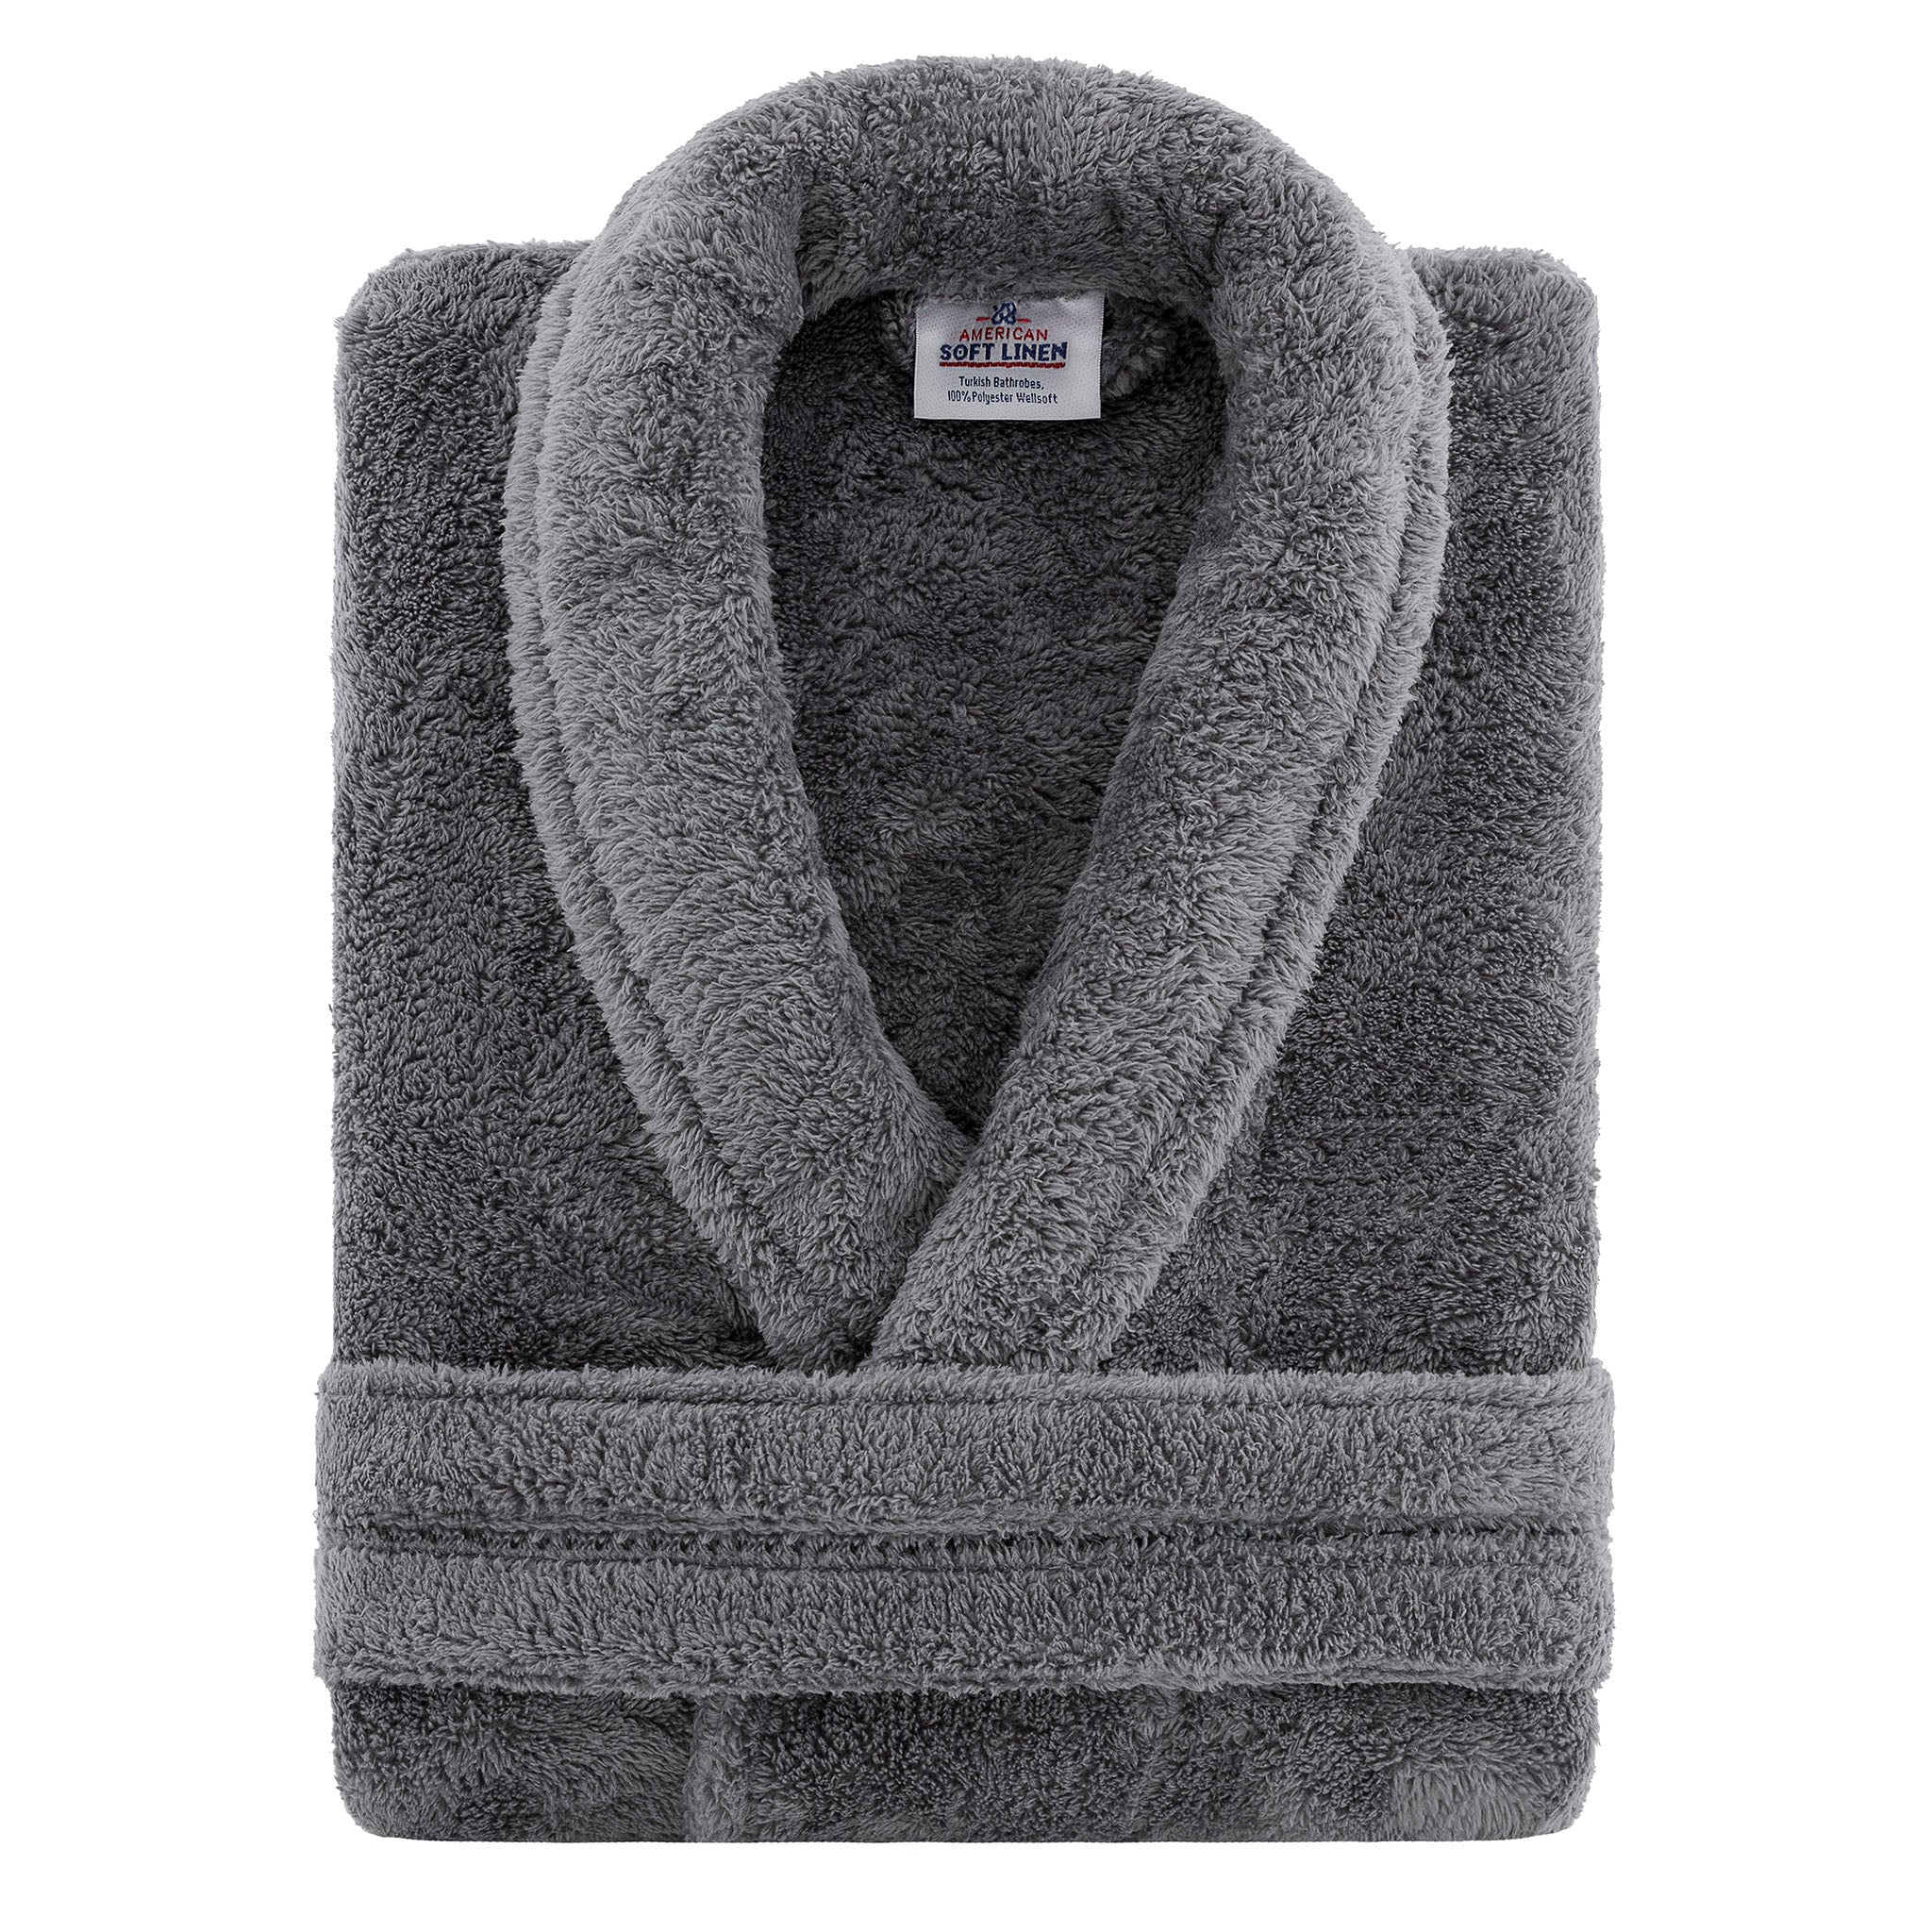 American Soft Linen Super Soft, Absorbent and Fluffy, Unisex Fleece Bathrobe S-M-gray-3